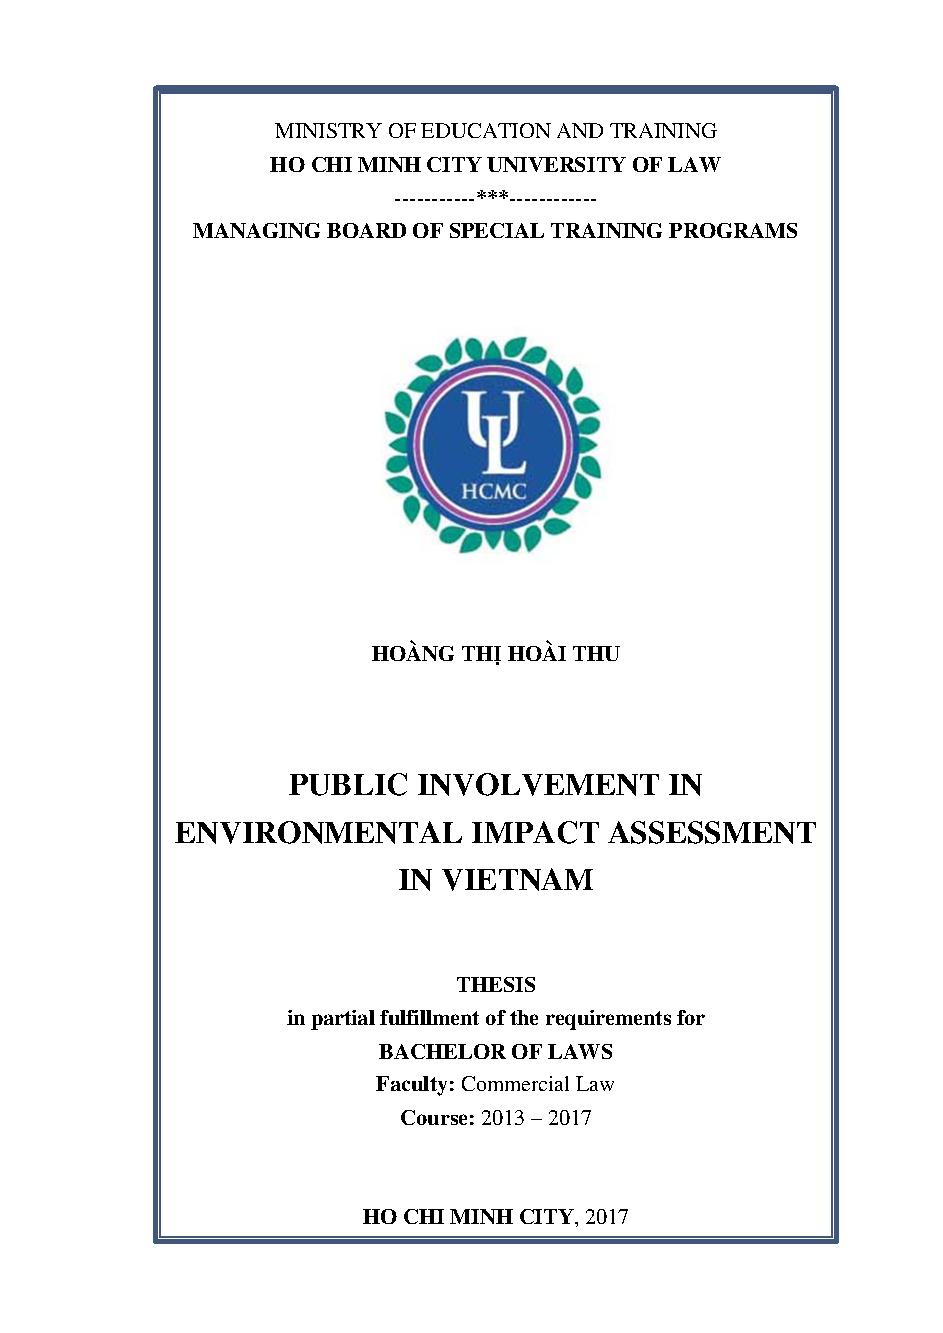 Public involvement in enviromental impact assessment in VietNam